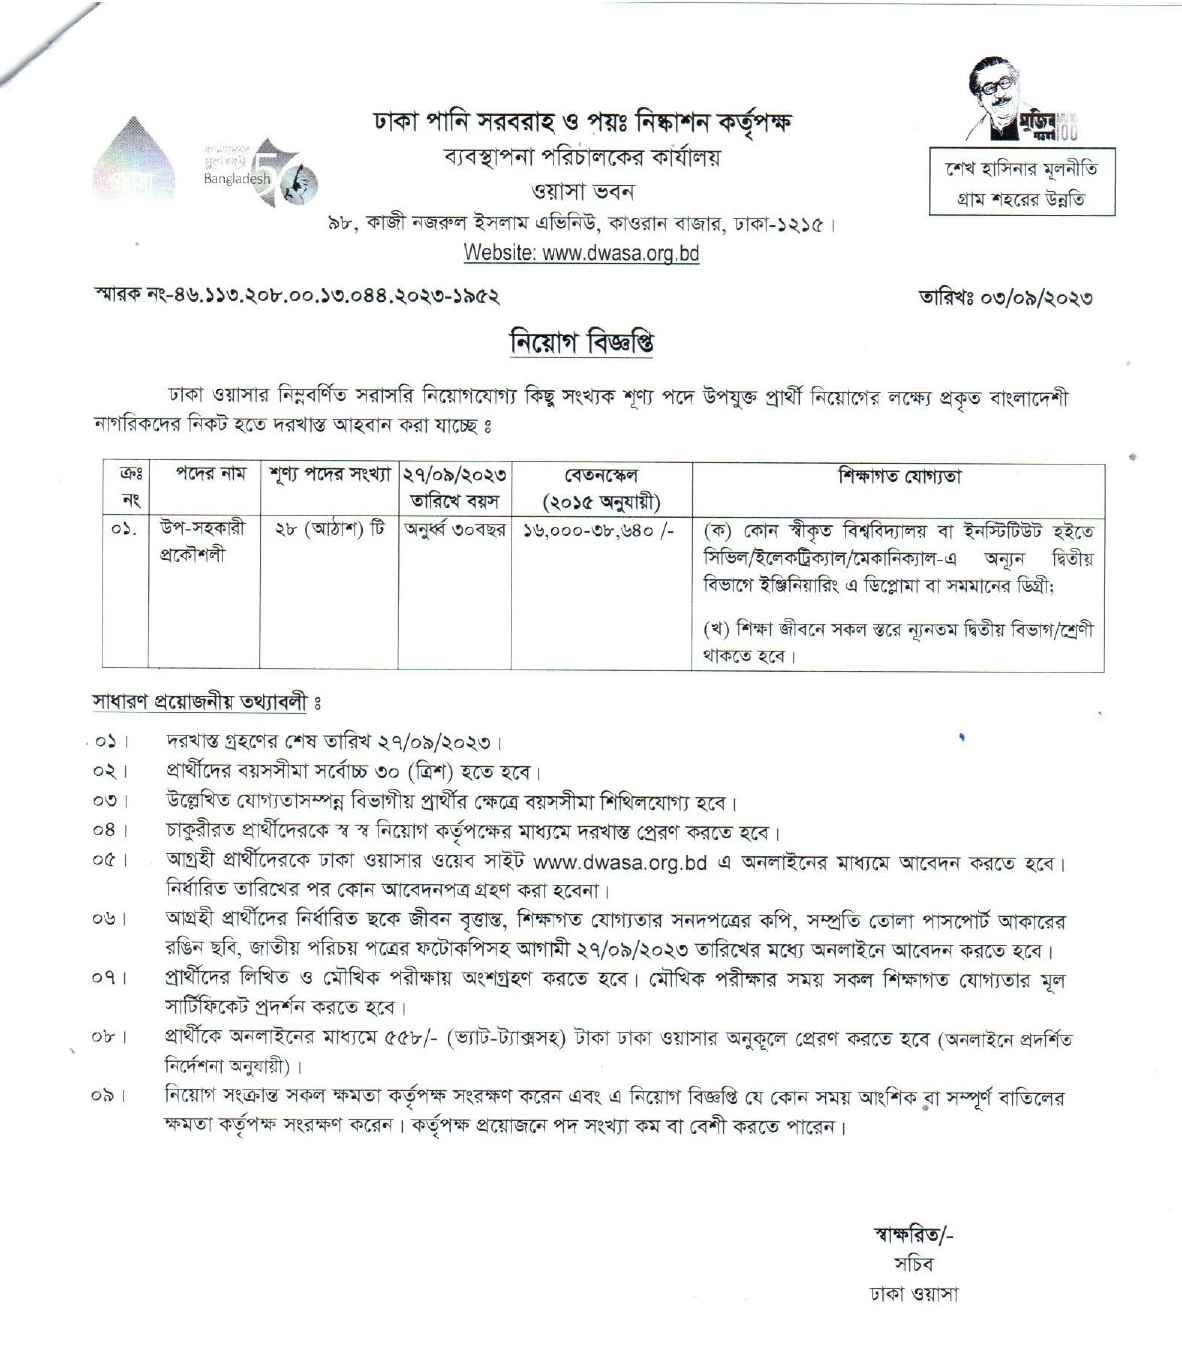 Dhaka WASA Job Circular